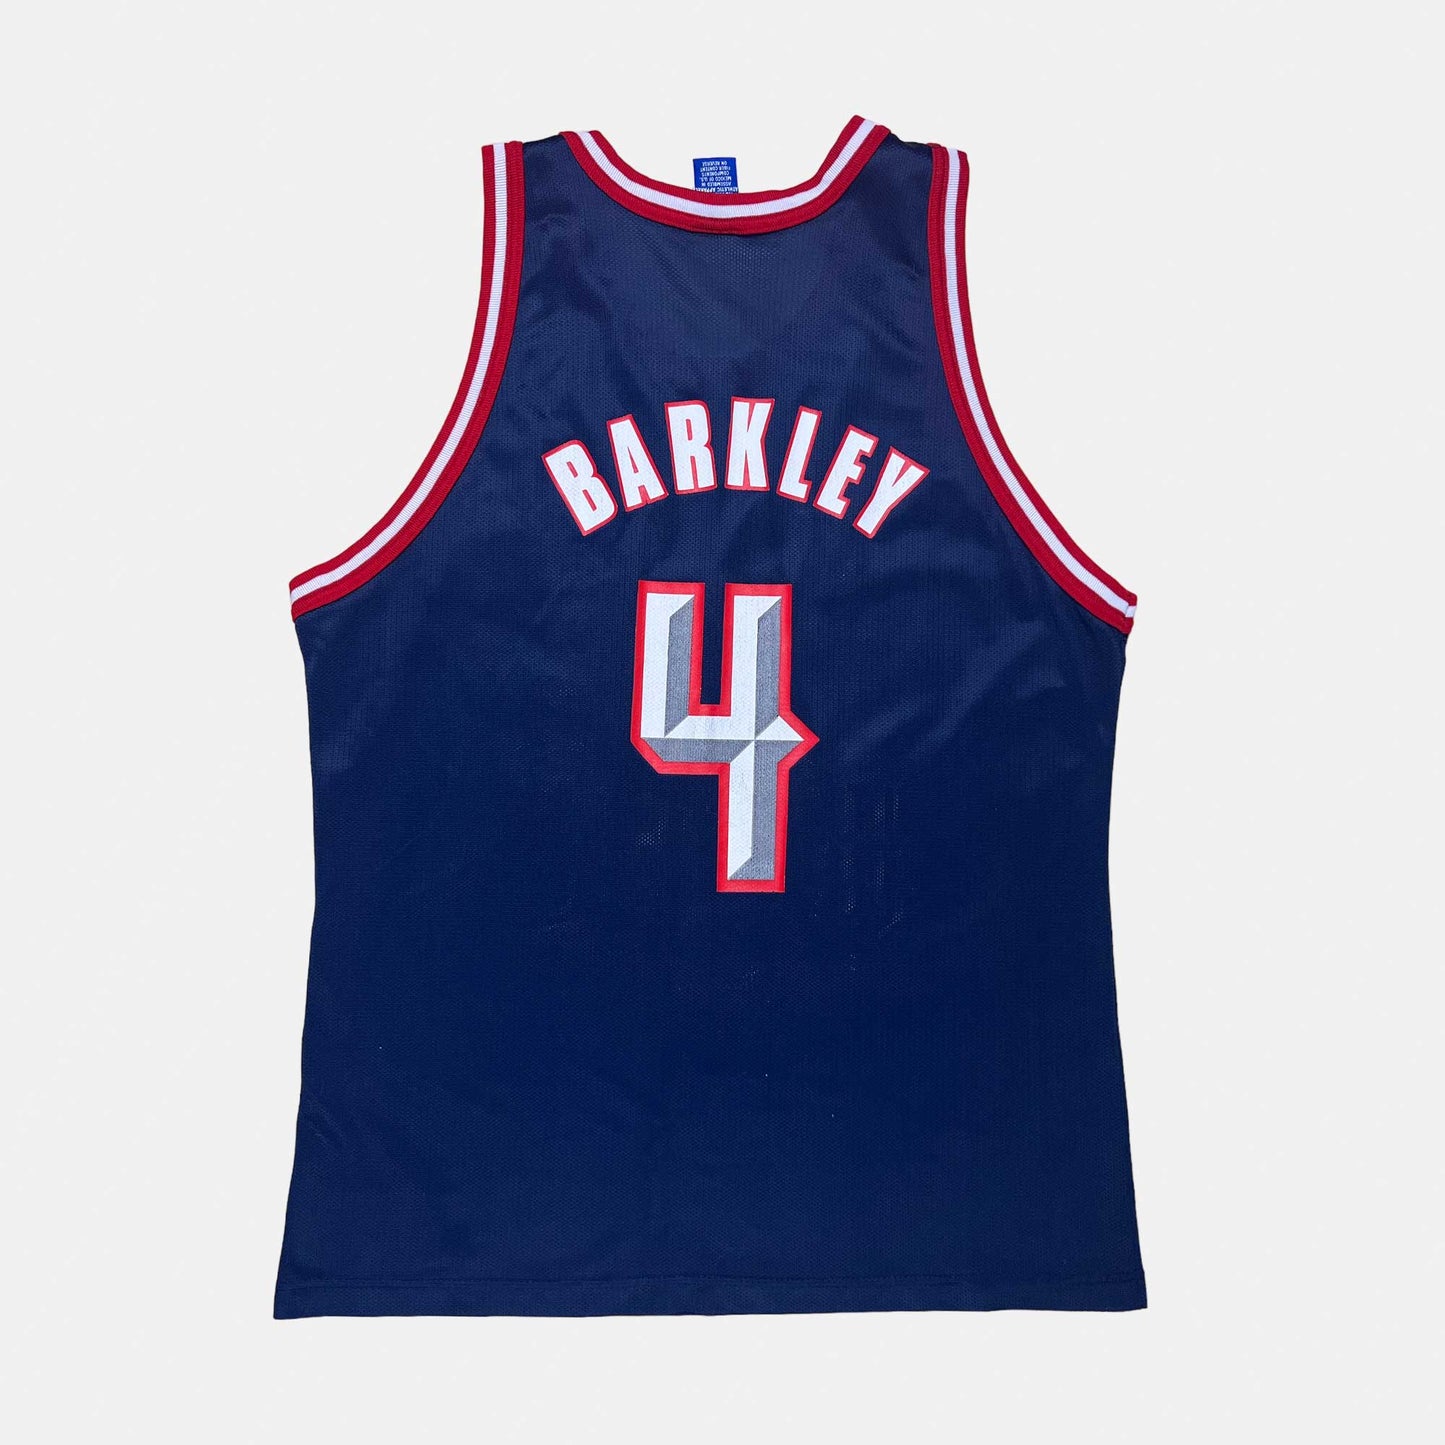 Houston Rockets - Charles Barkley - Größe XL / US48 - Champion - NBA Trikot